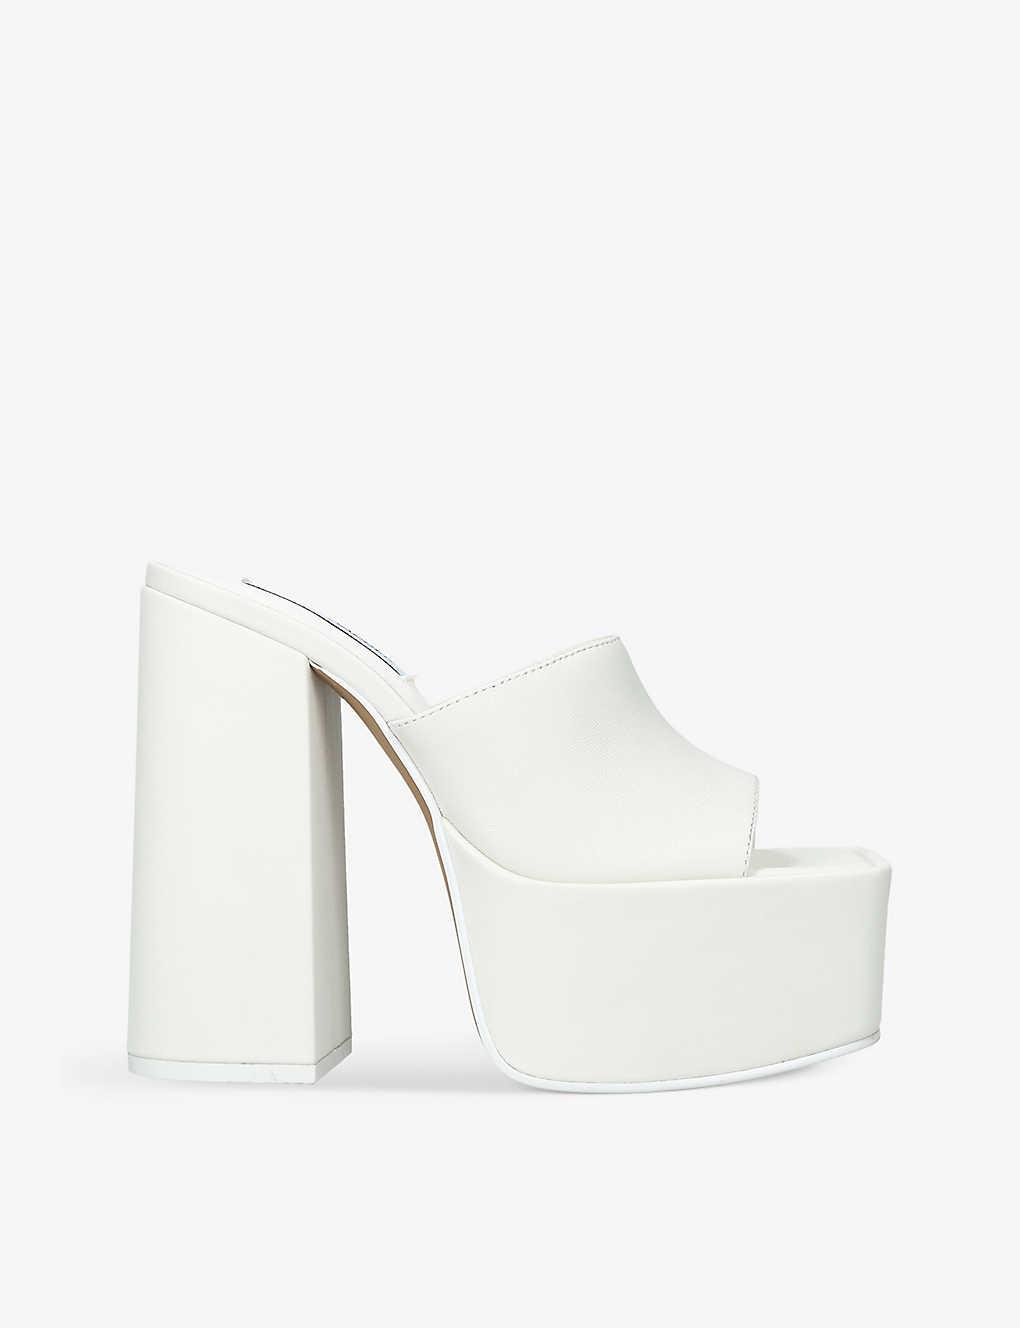 Steve Madden Trixie Leather Platform Sandals in White | Lyst